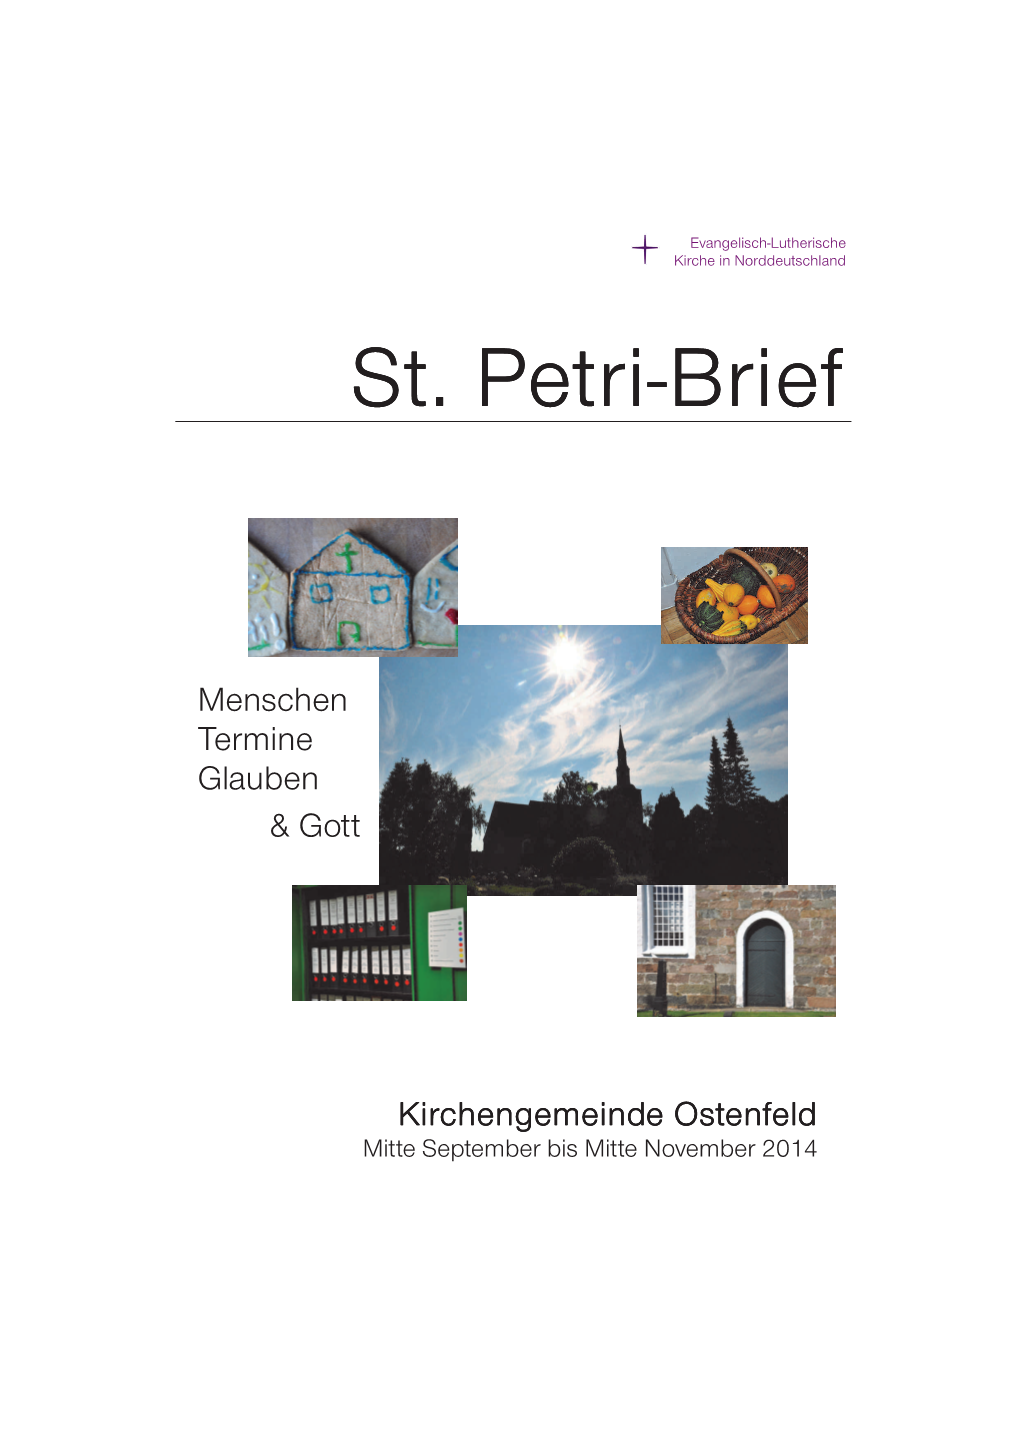 St. Petri St. Petri-Brief